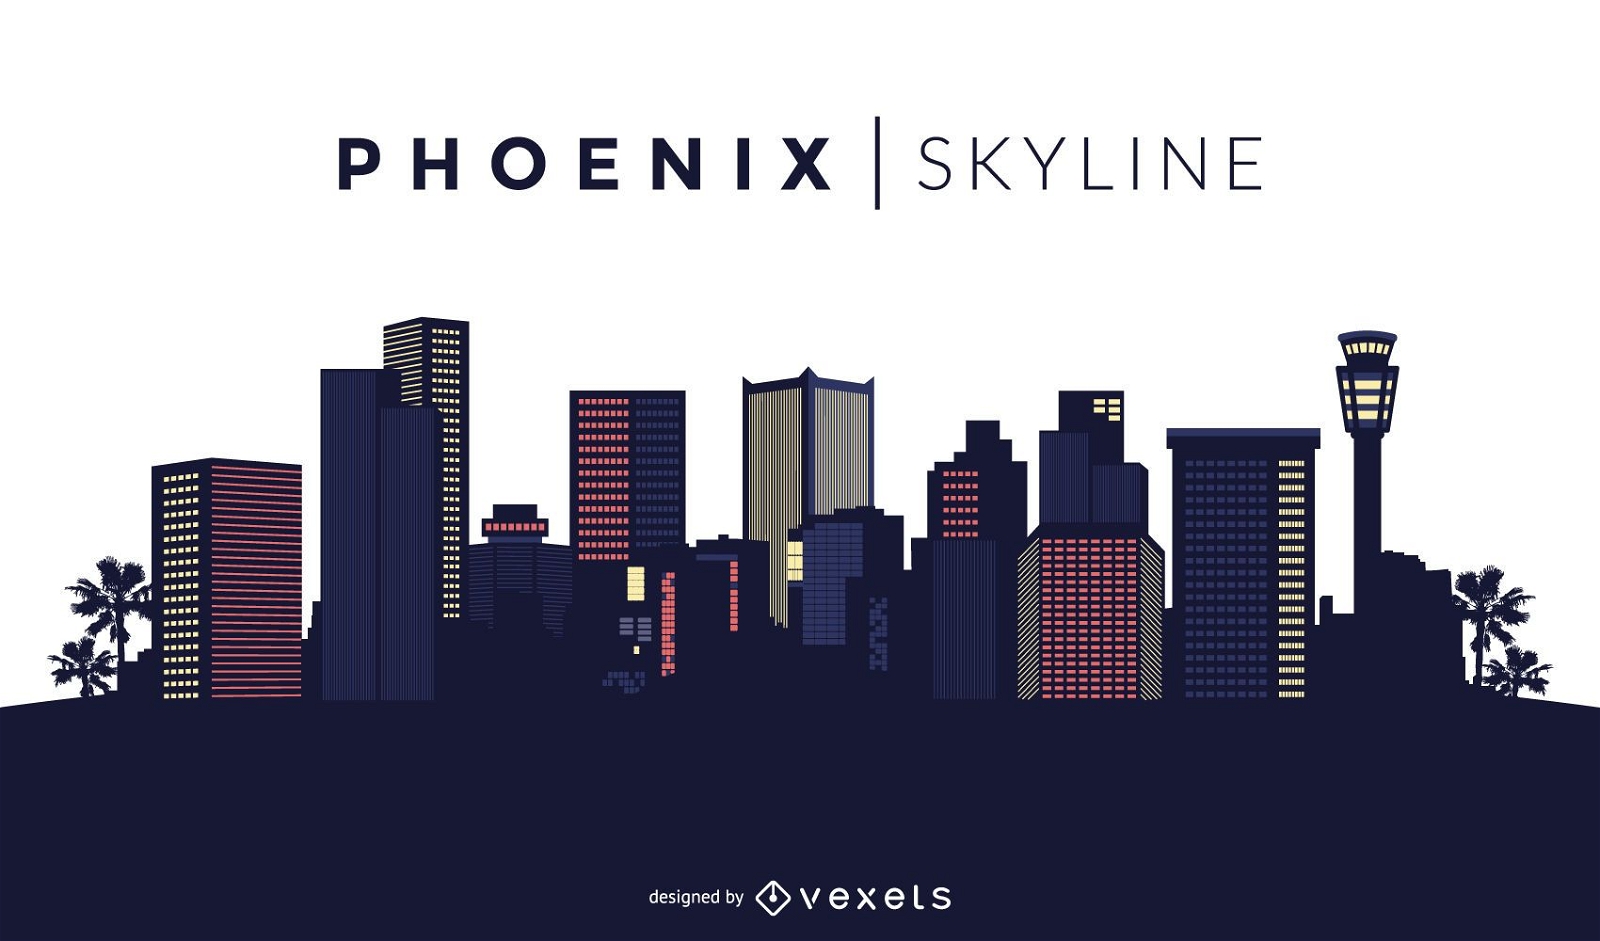 Phoenix skyline design